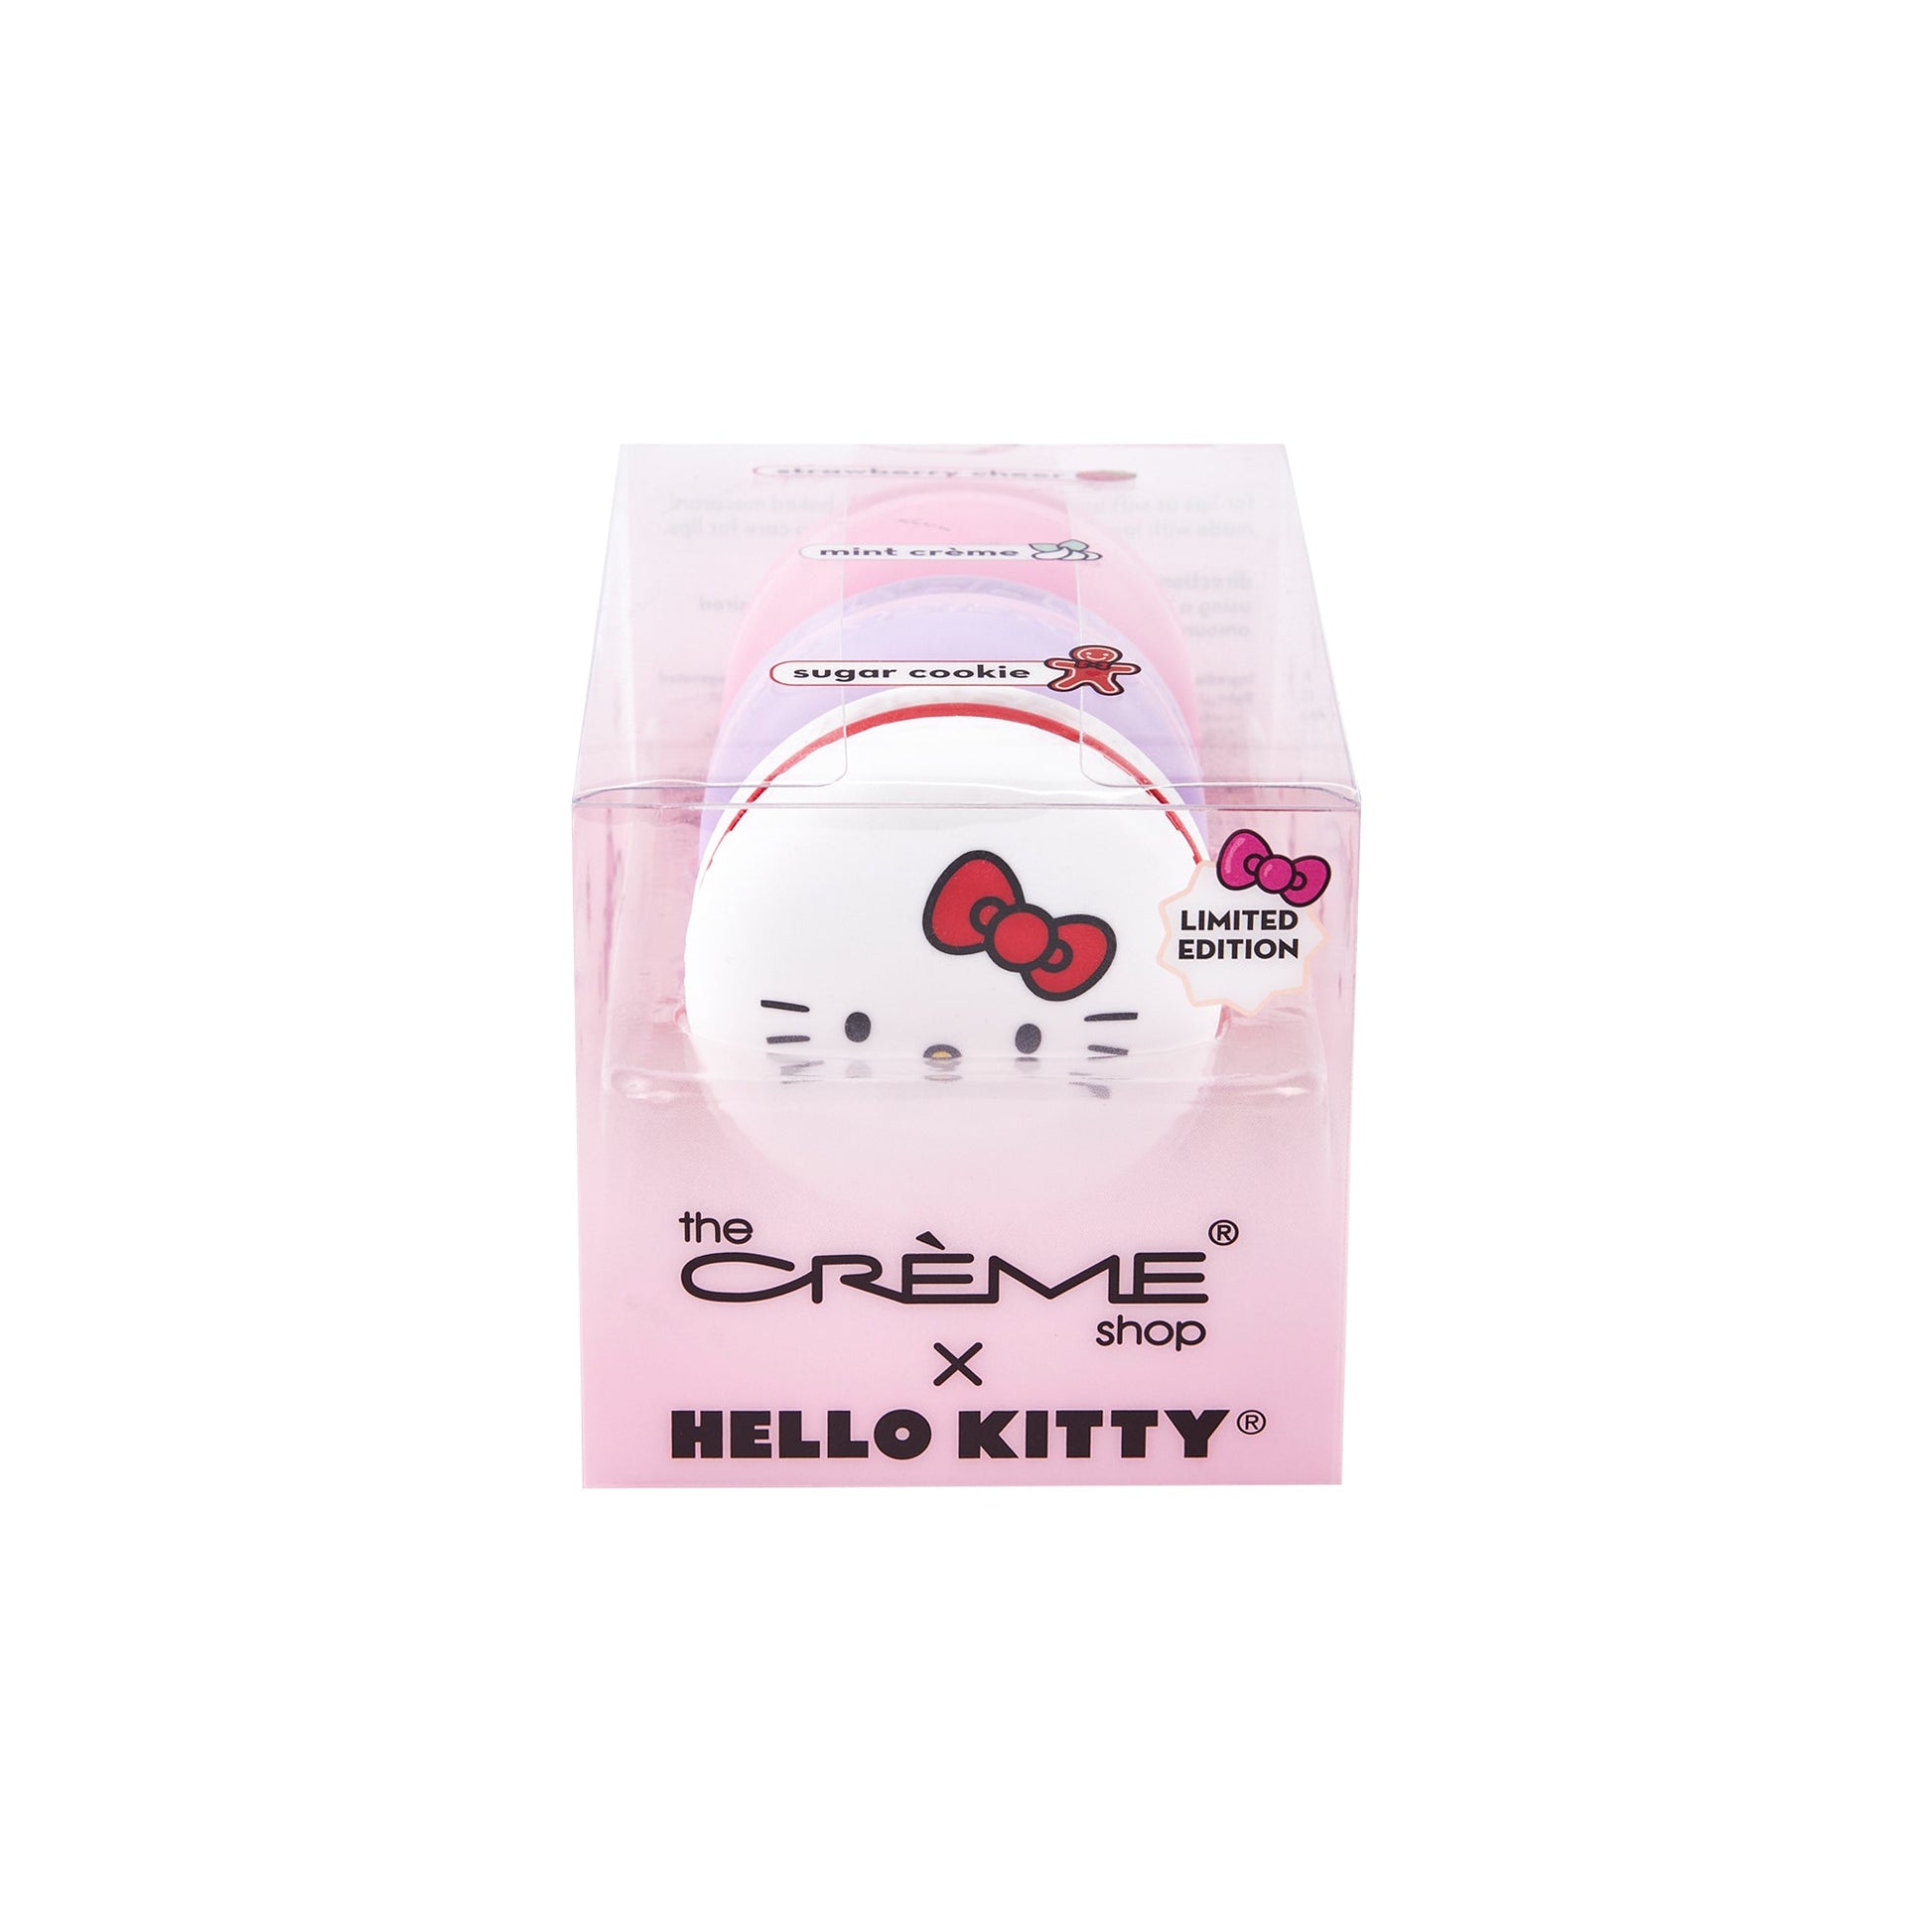 Hello Kitty Holiday Kisses! Macaron Lip Balm Trio Gift Set Lip Balms - The Crème Shop x Sanrio 